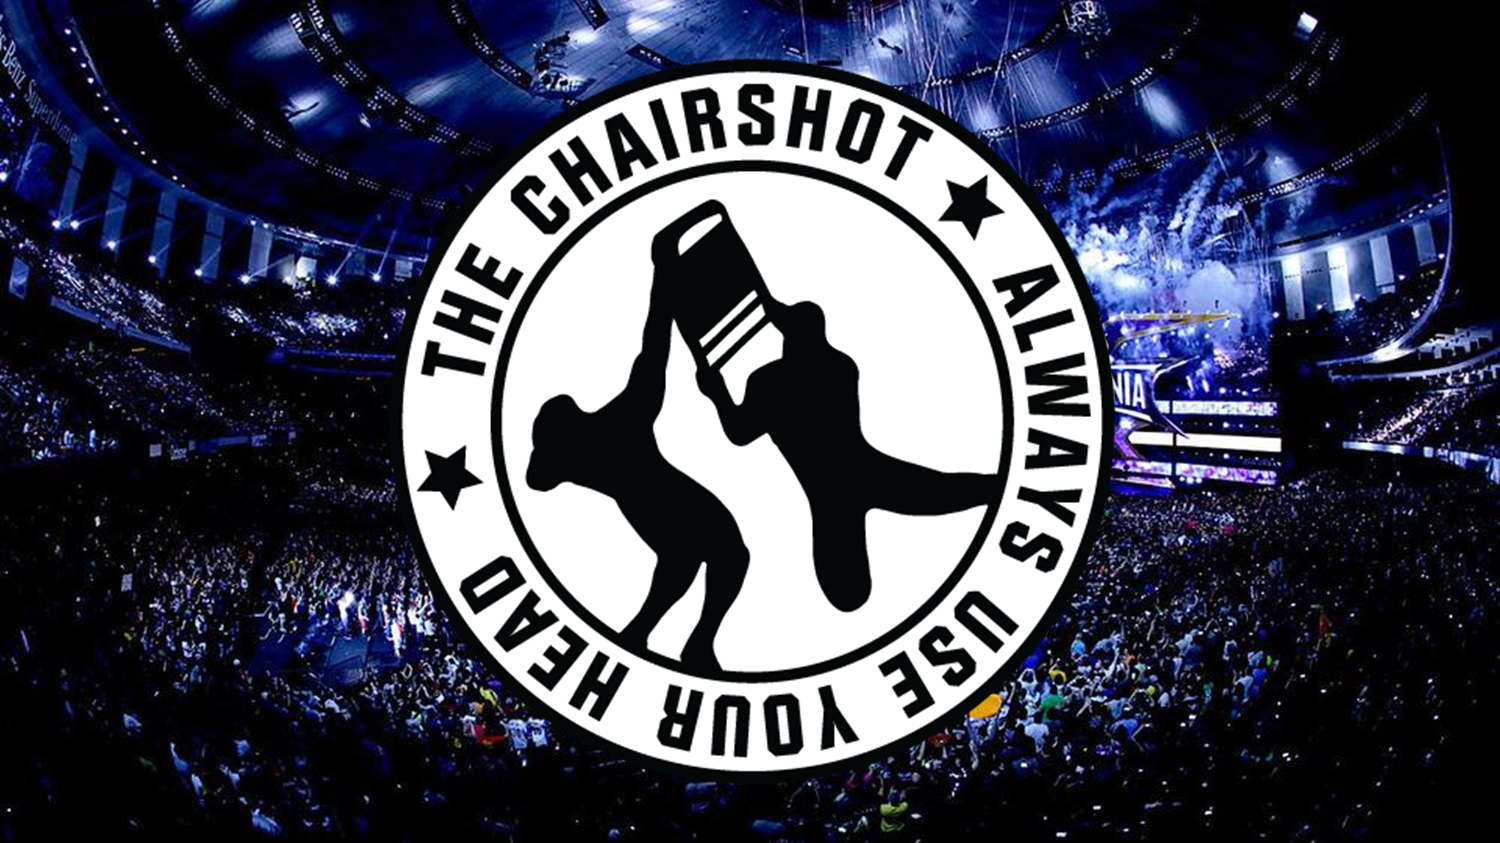 The Chairshot Arena